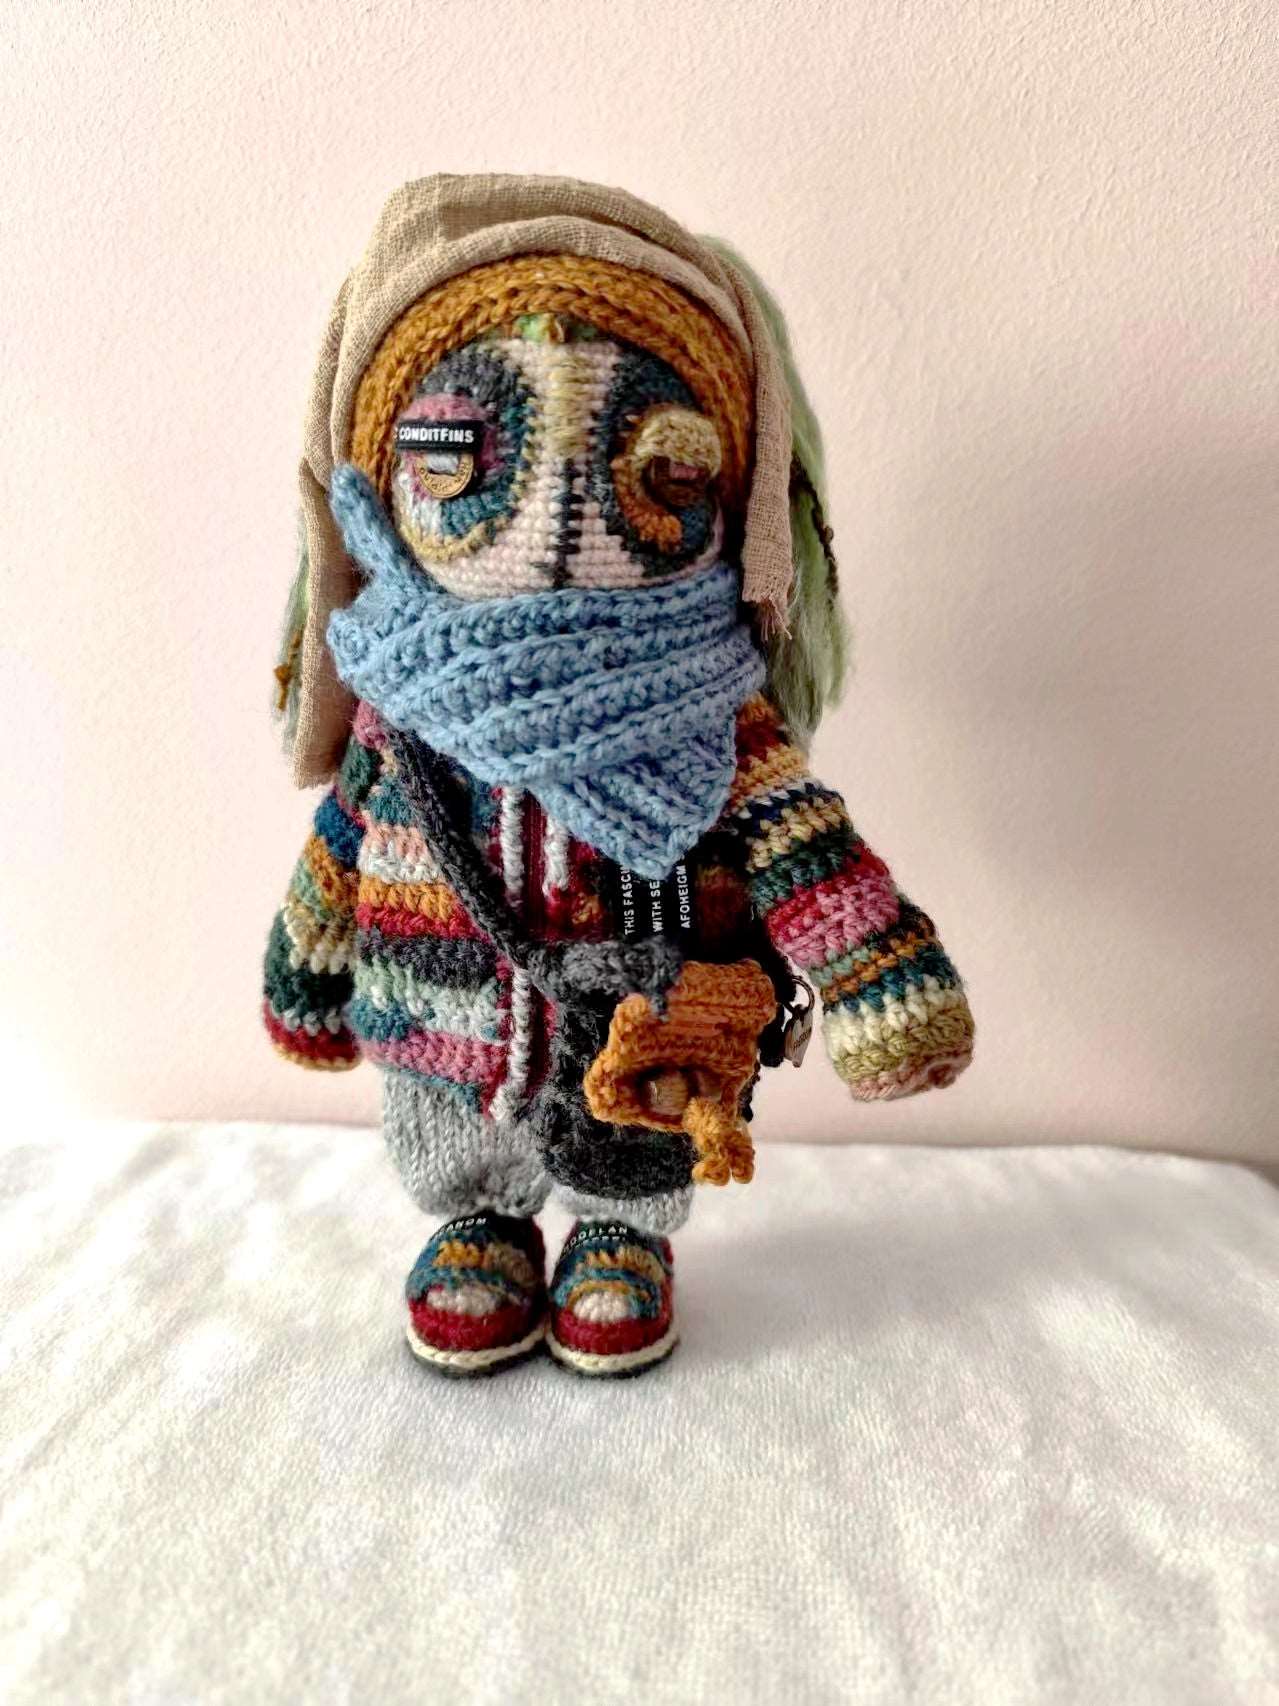 Macabre Crochet Ghost Dolls for Alternative Home Decor